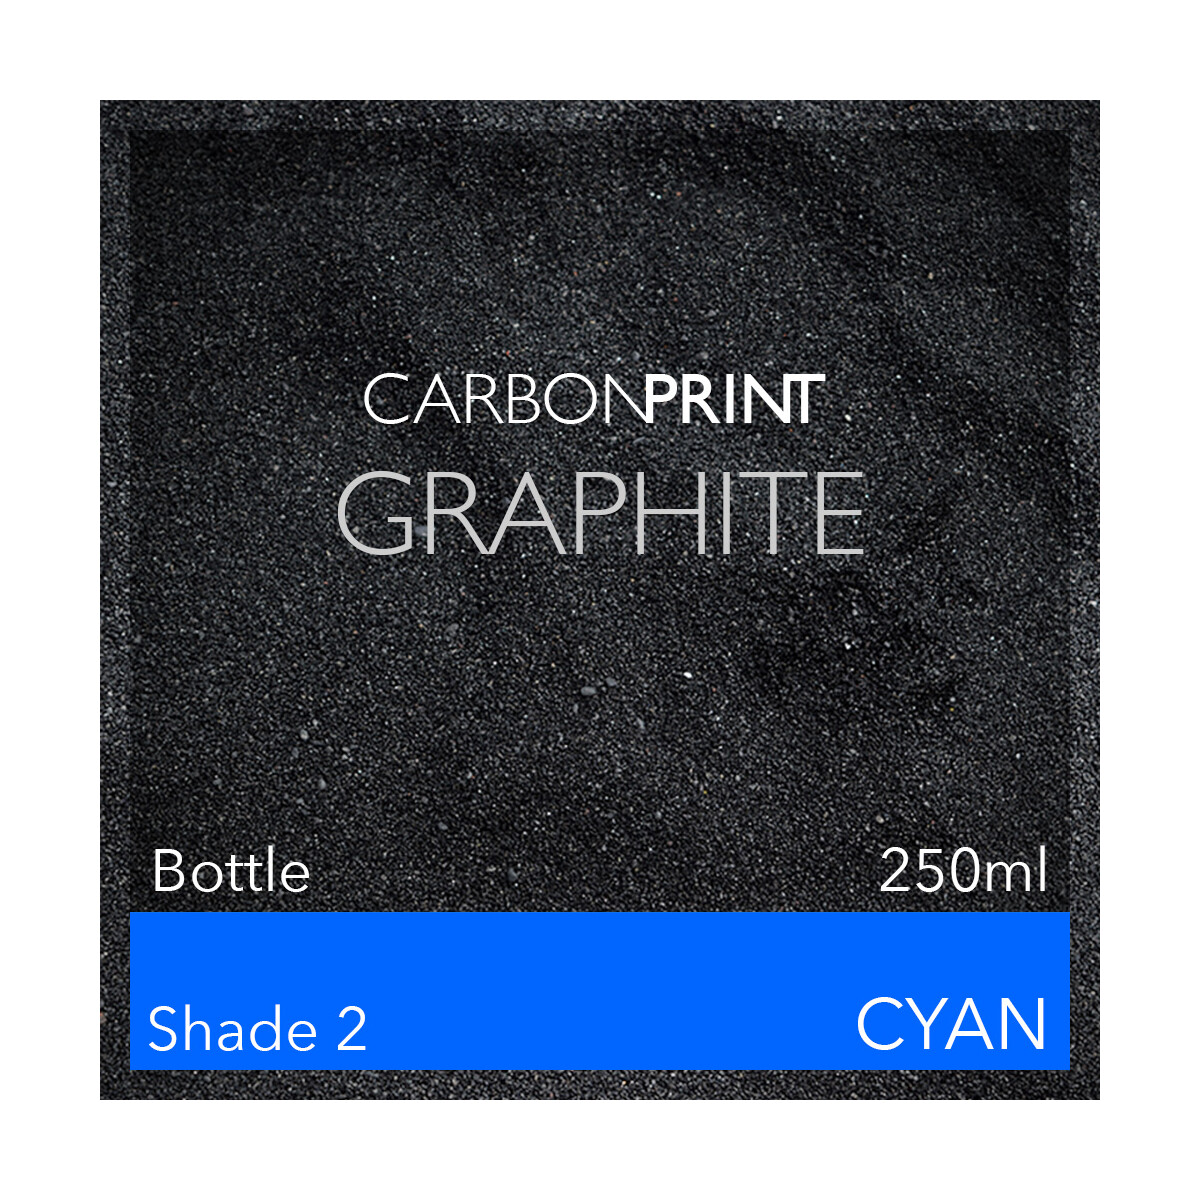 Carbonprint Graphite Shade2 Channel C 250ml